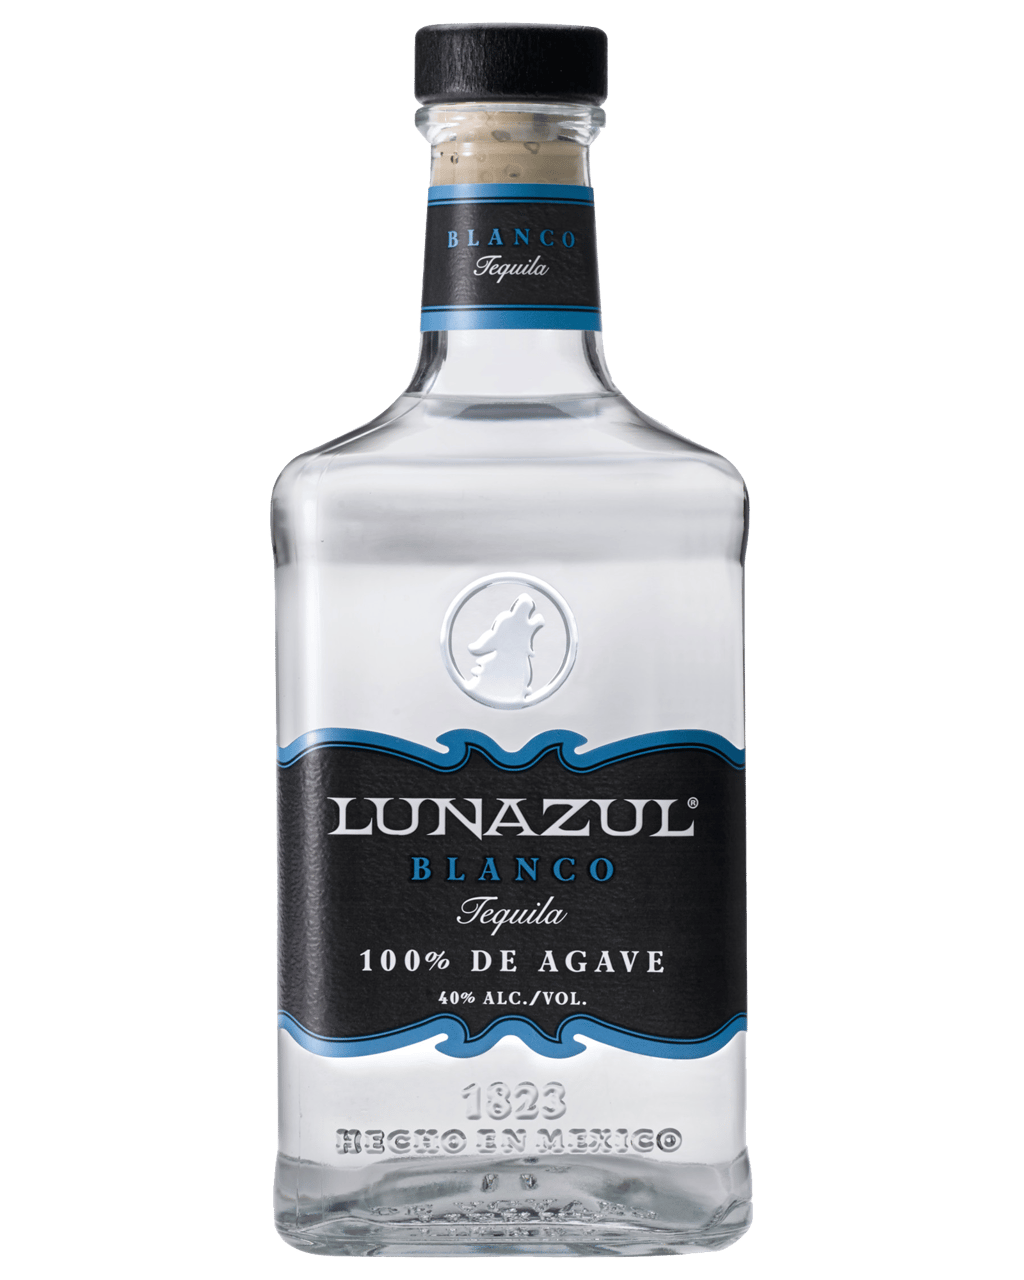 is lunazul tequila gluten free